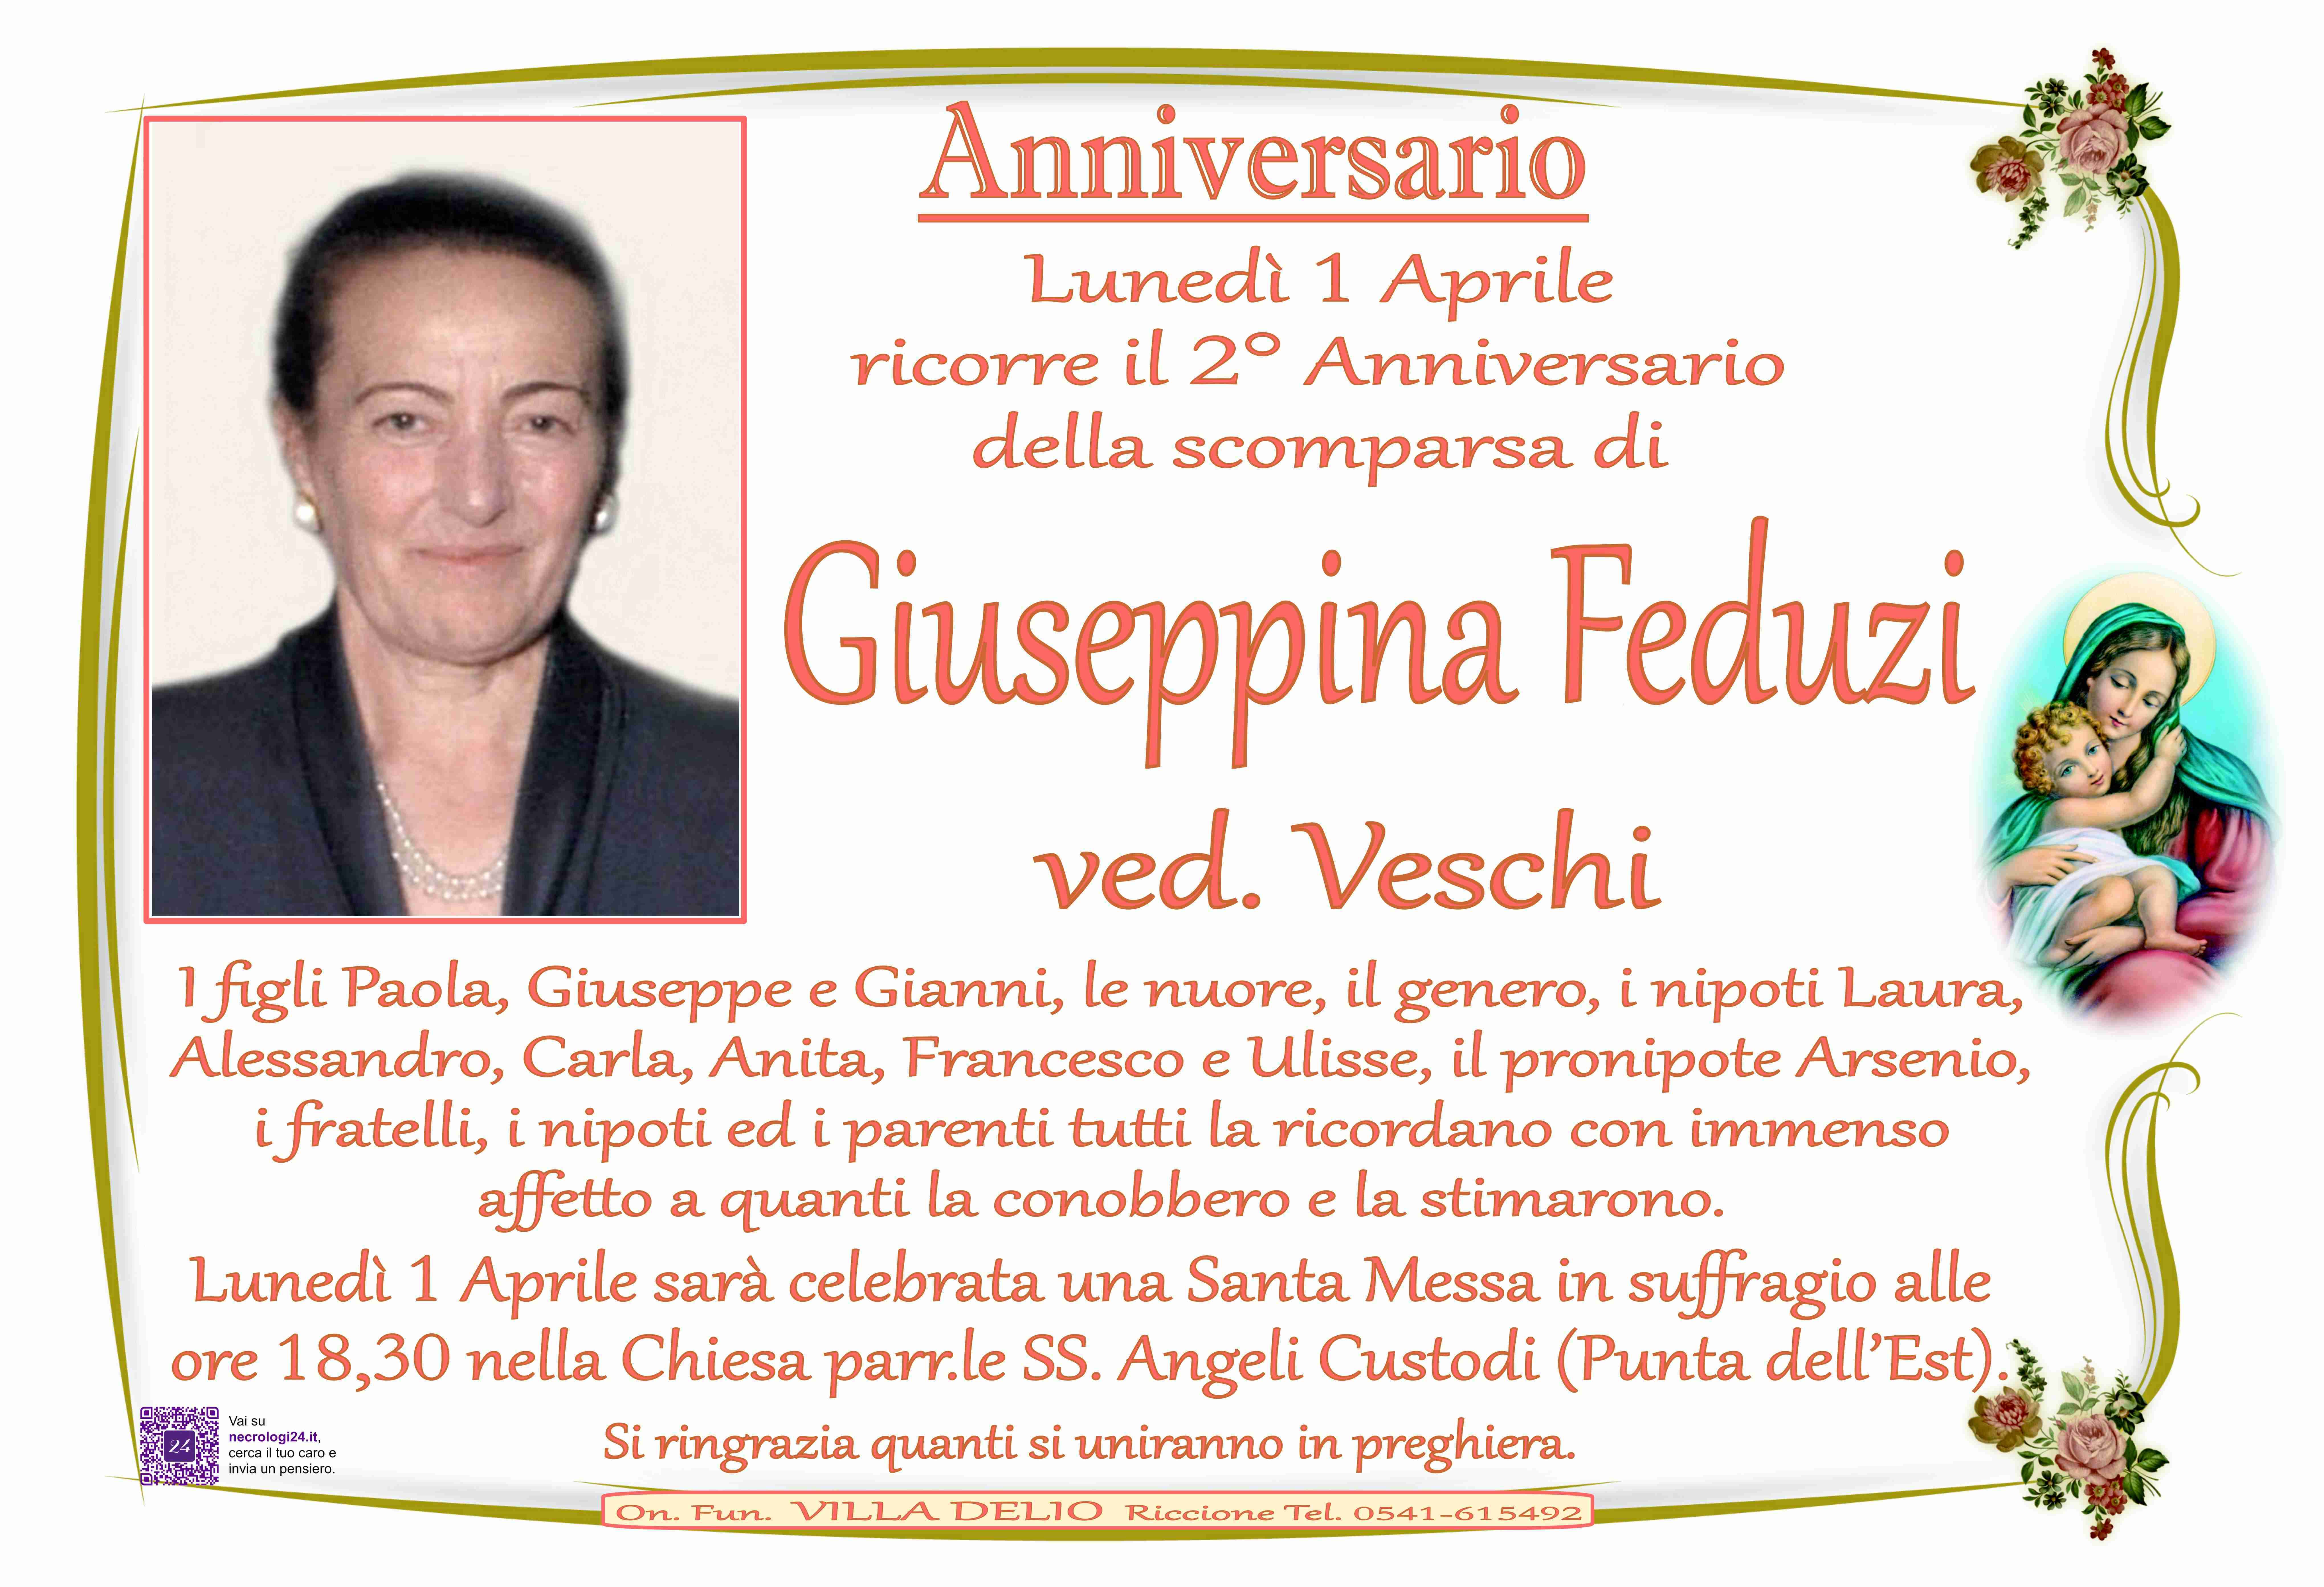 Giuseppina Feduzi ved. Veschi